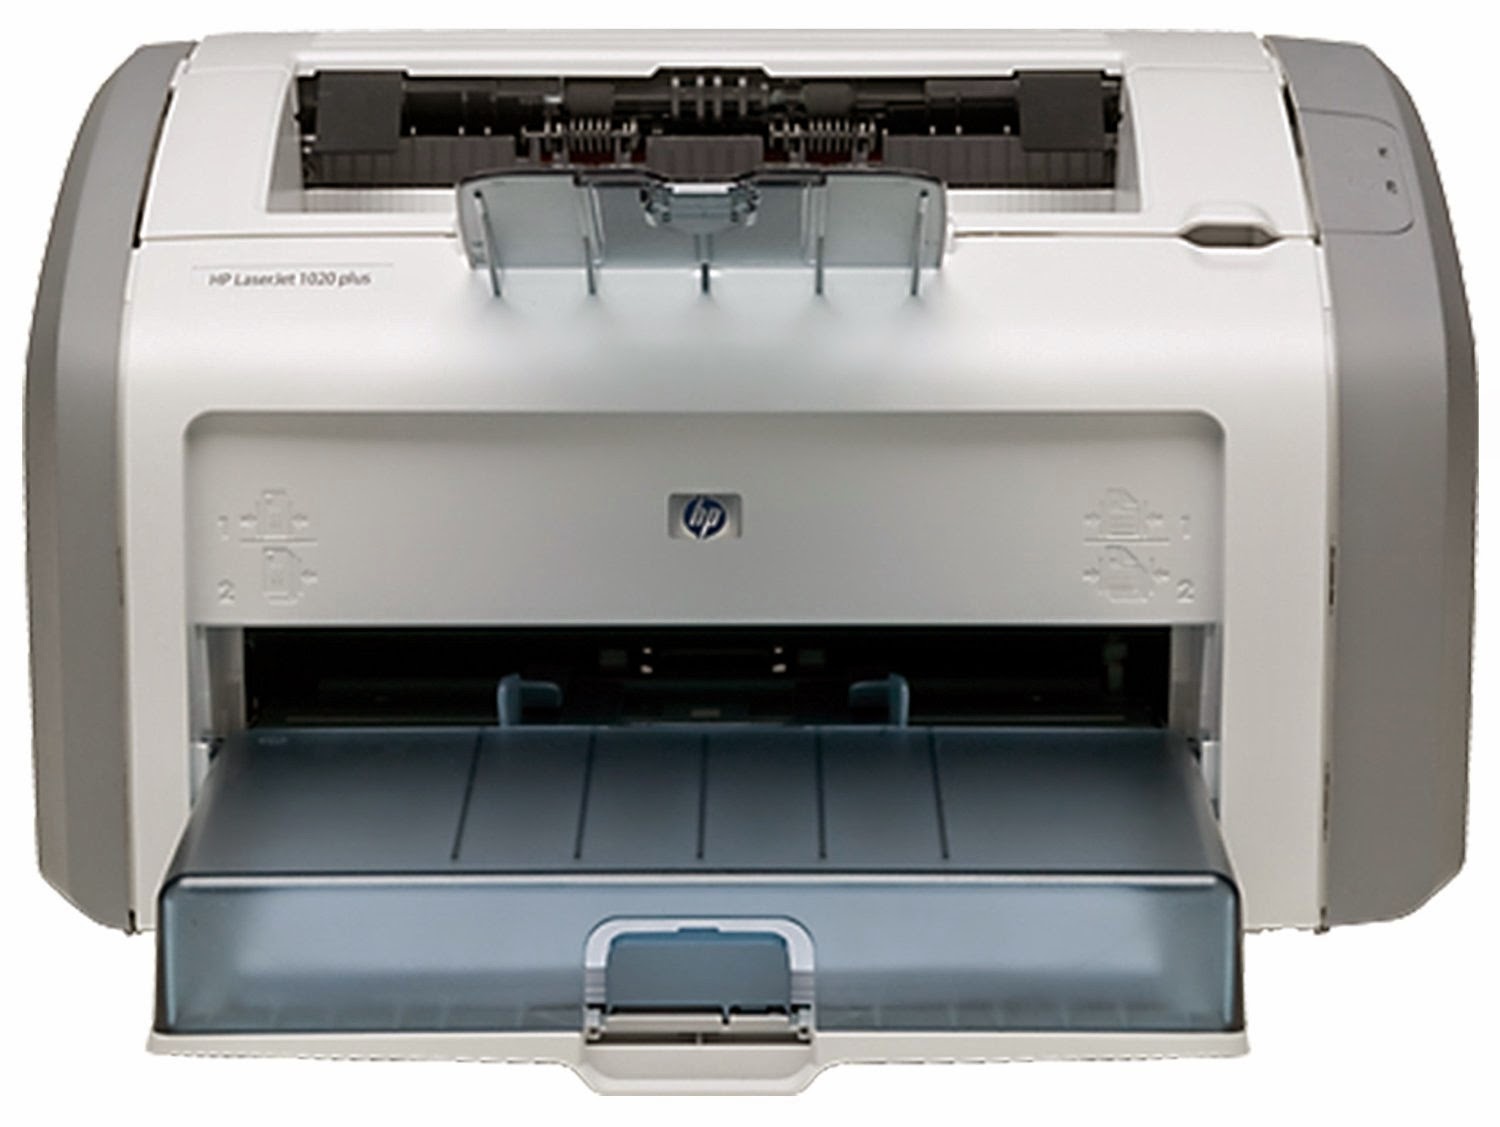 HP LaserJet 1020 Plus Printer Driver Series Support Download | Free ...